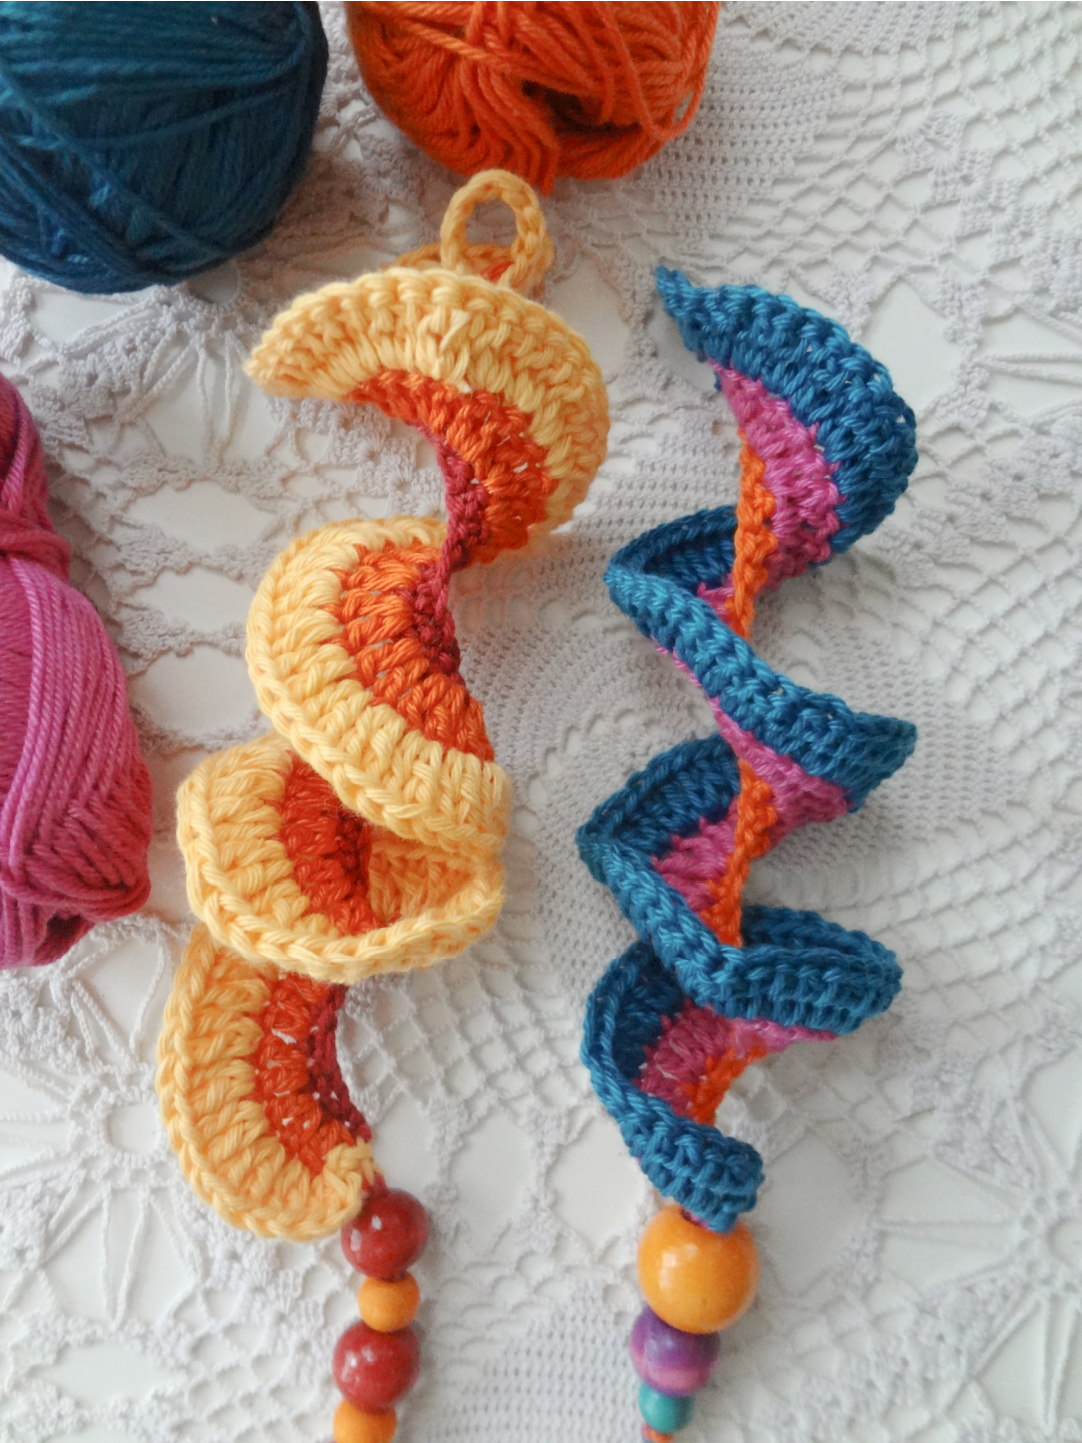 Beginner Friendly Crochet Project: Crochet Wind Spinner 